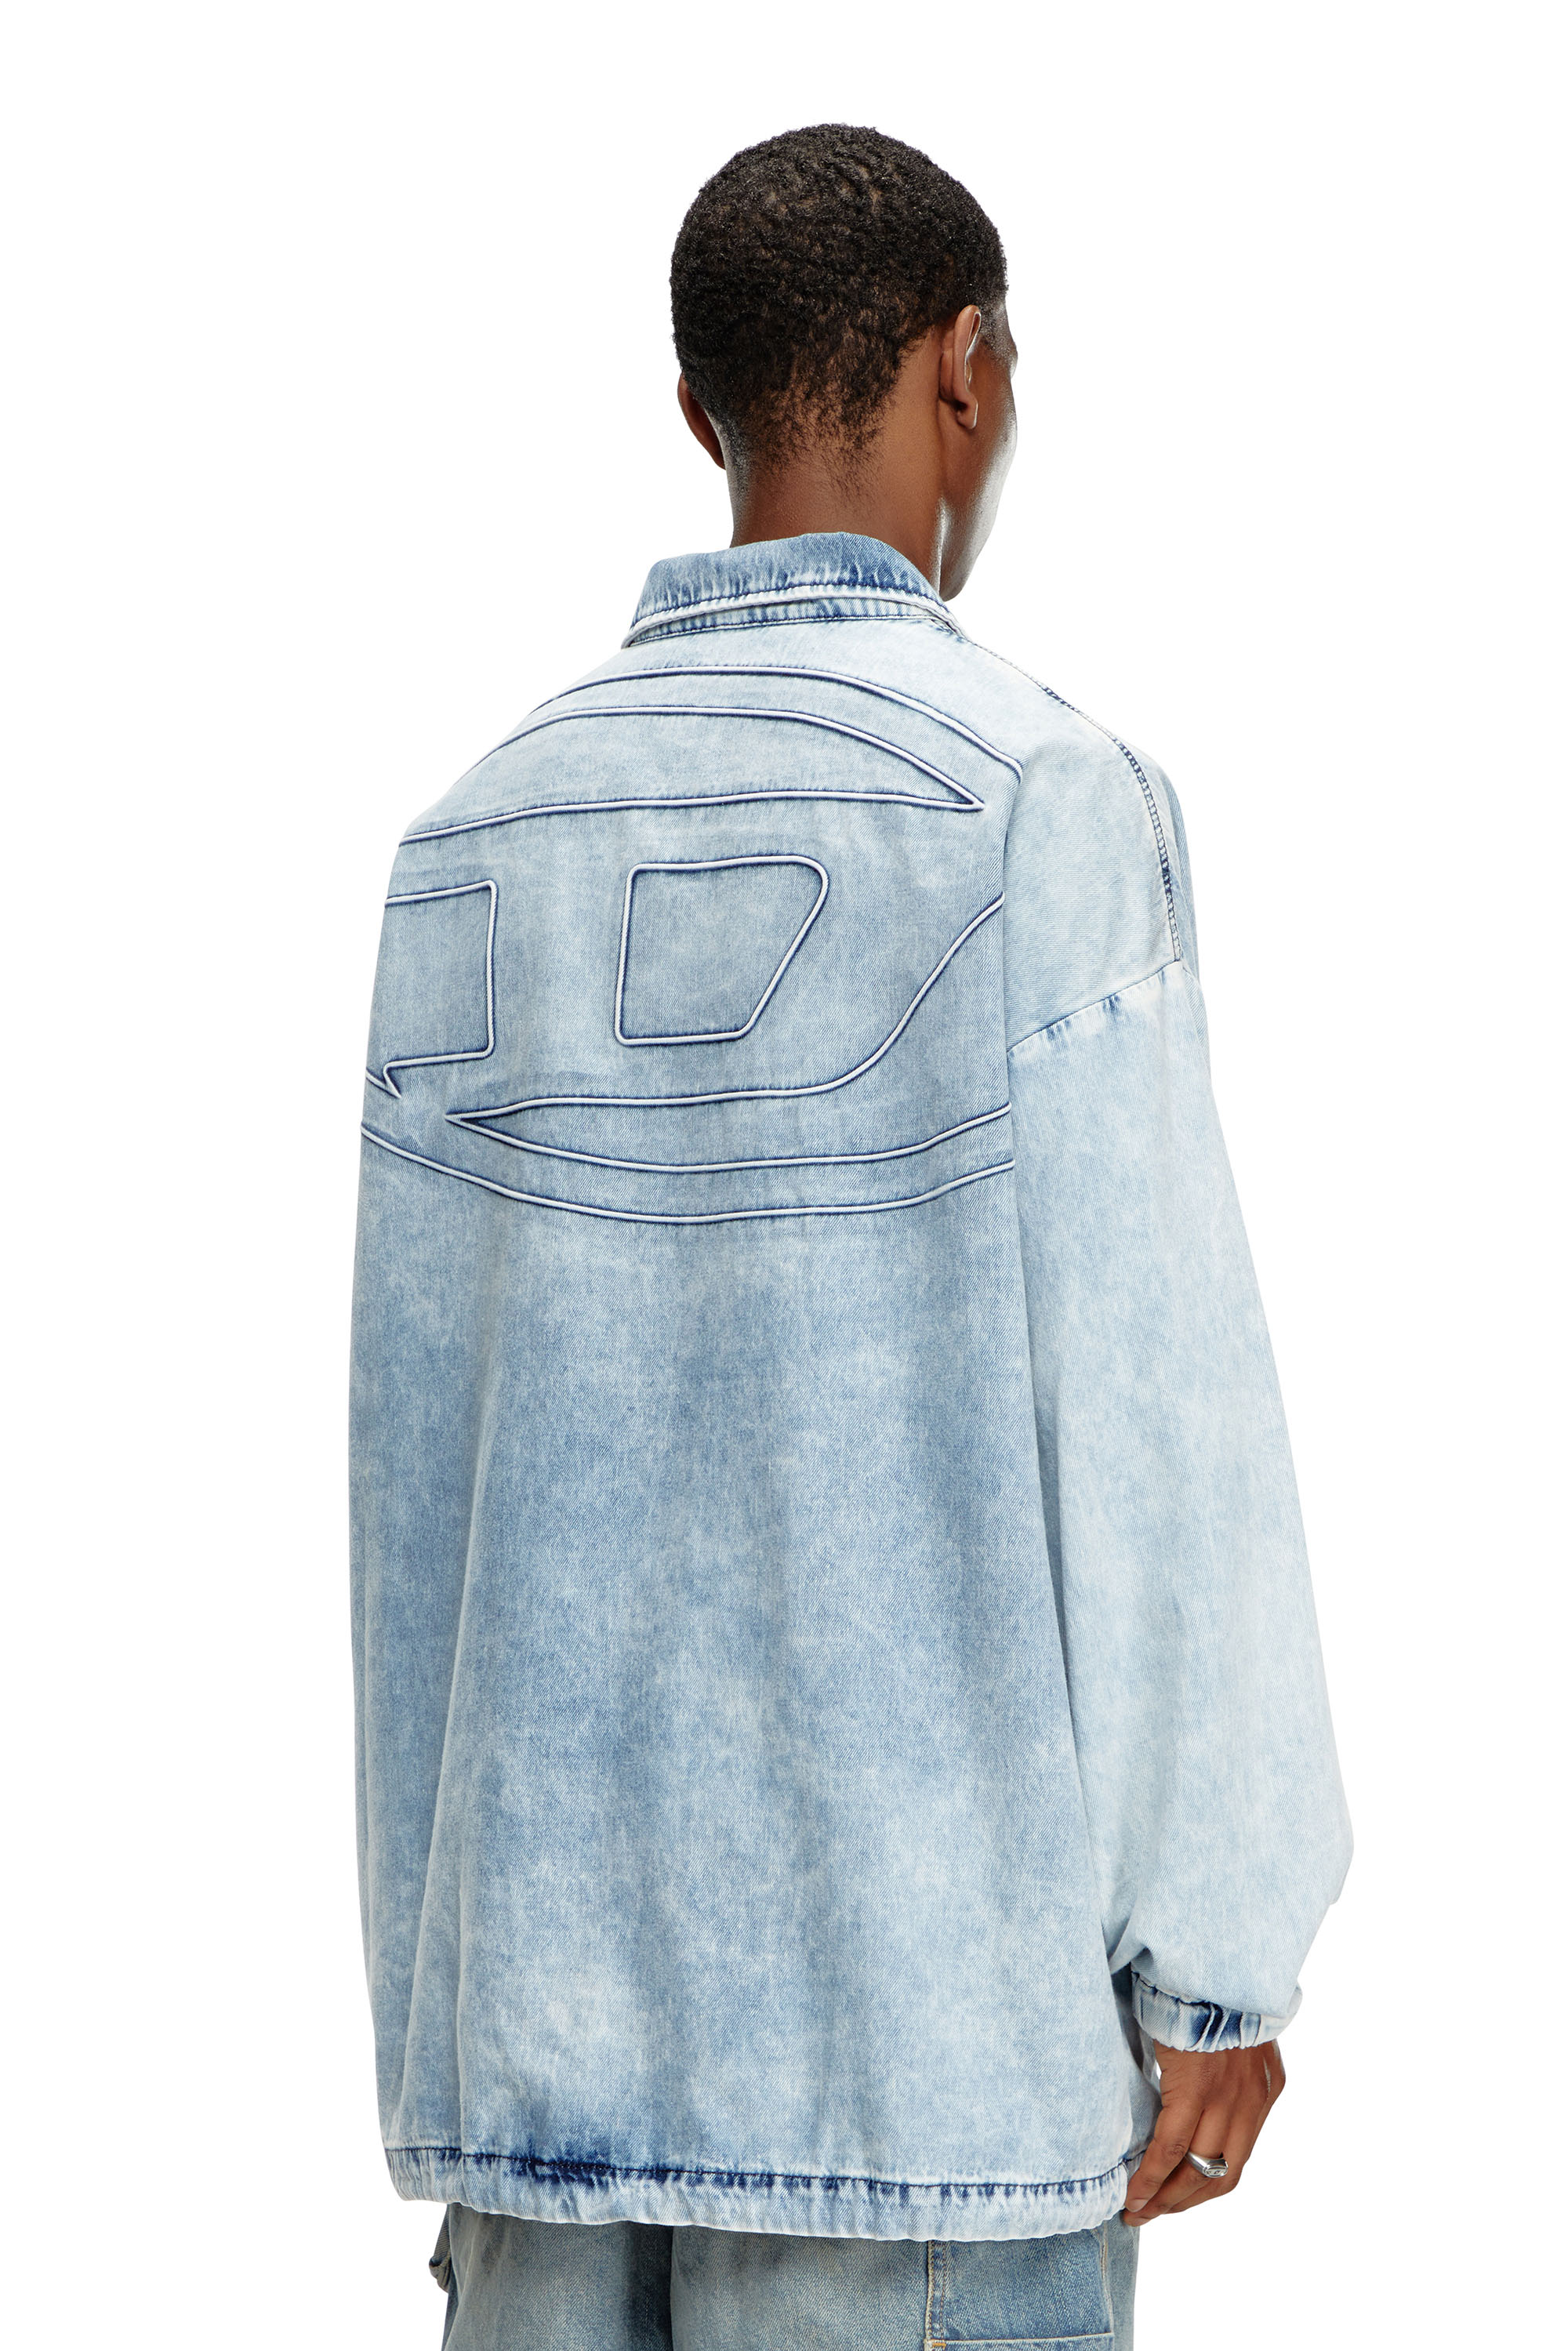 Diesel - D-KRAP-S1, Man Denim jacket with Oval D in Blue - Image 4